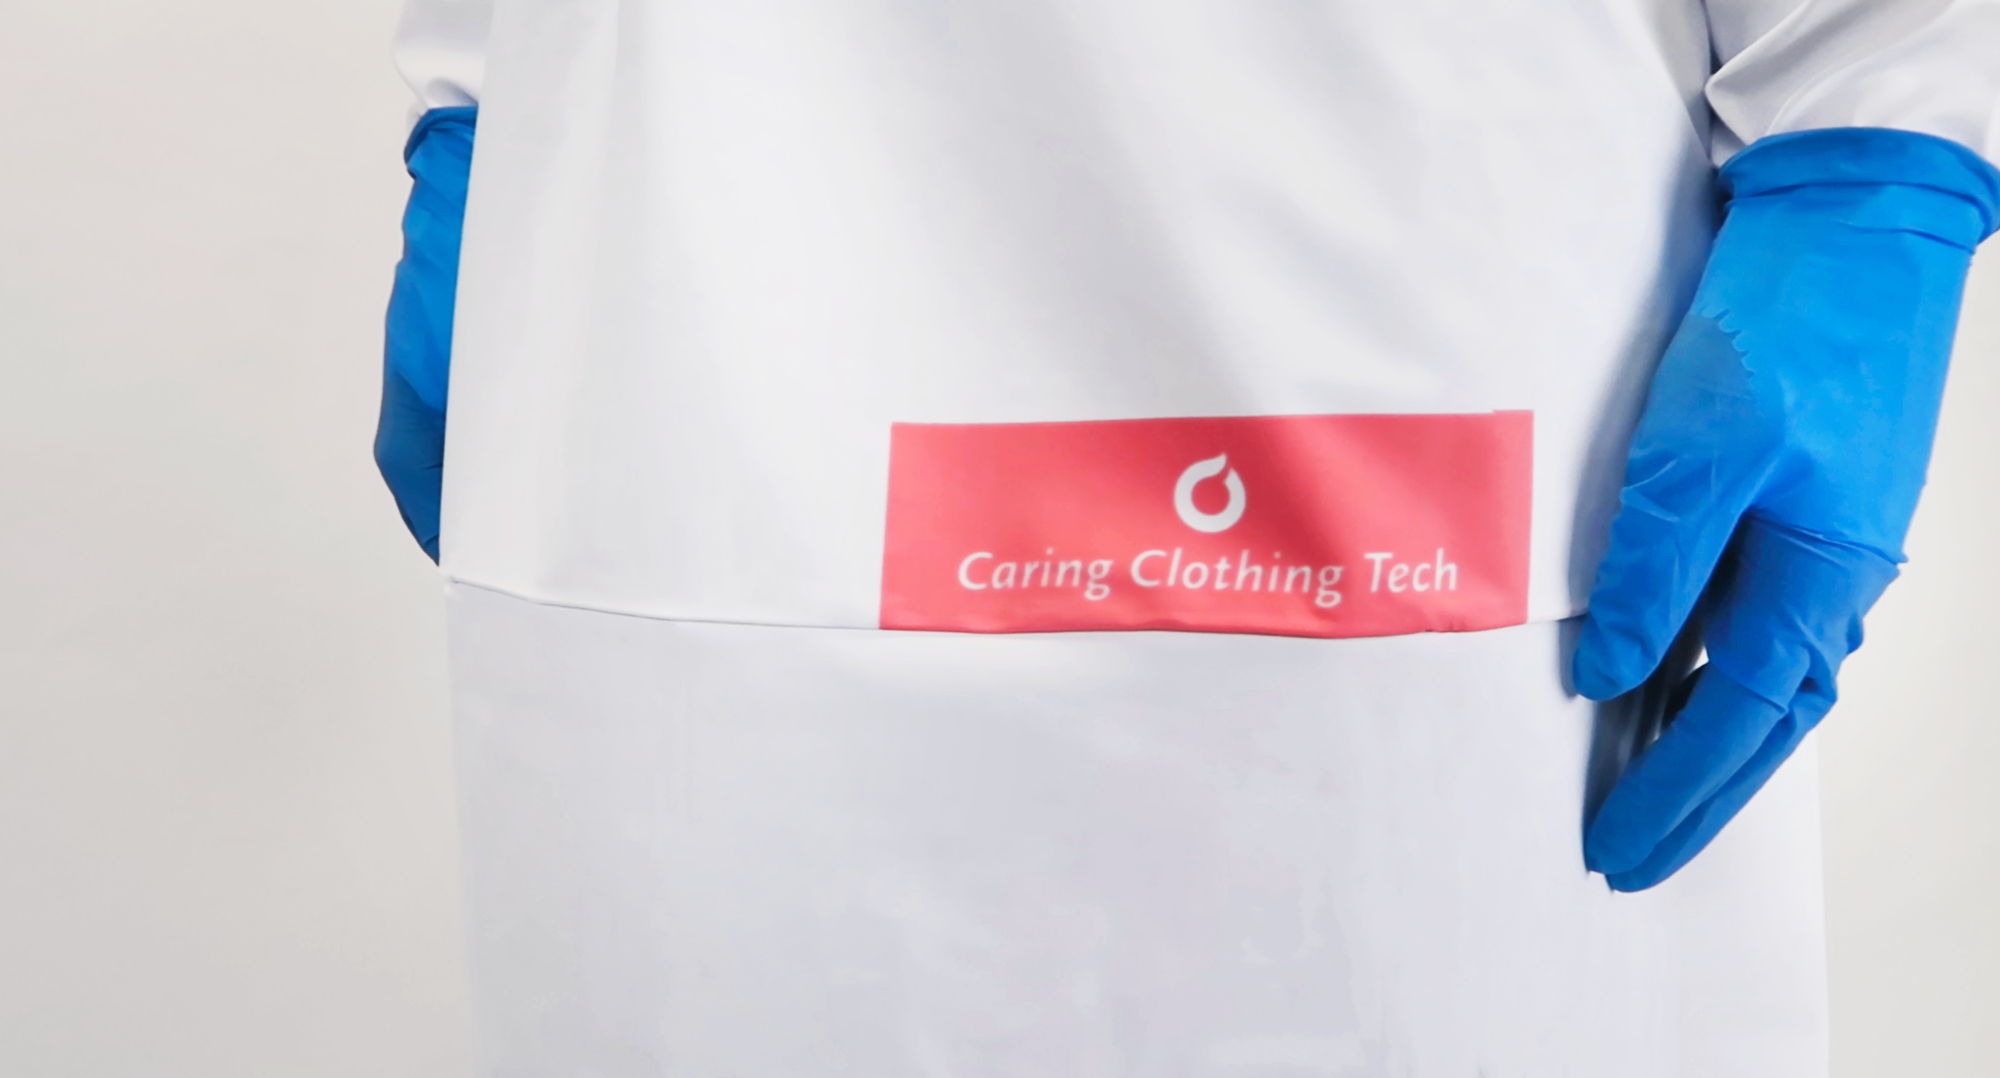 Caring Clothing Tech